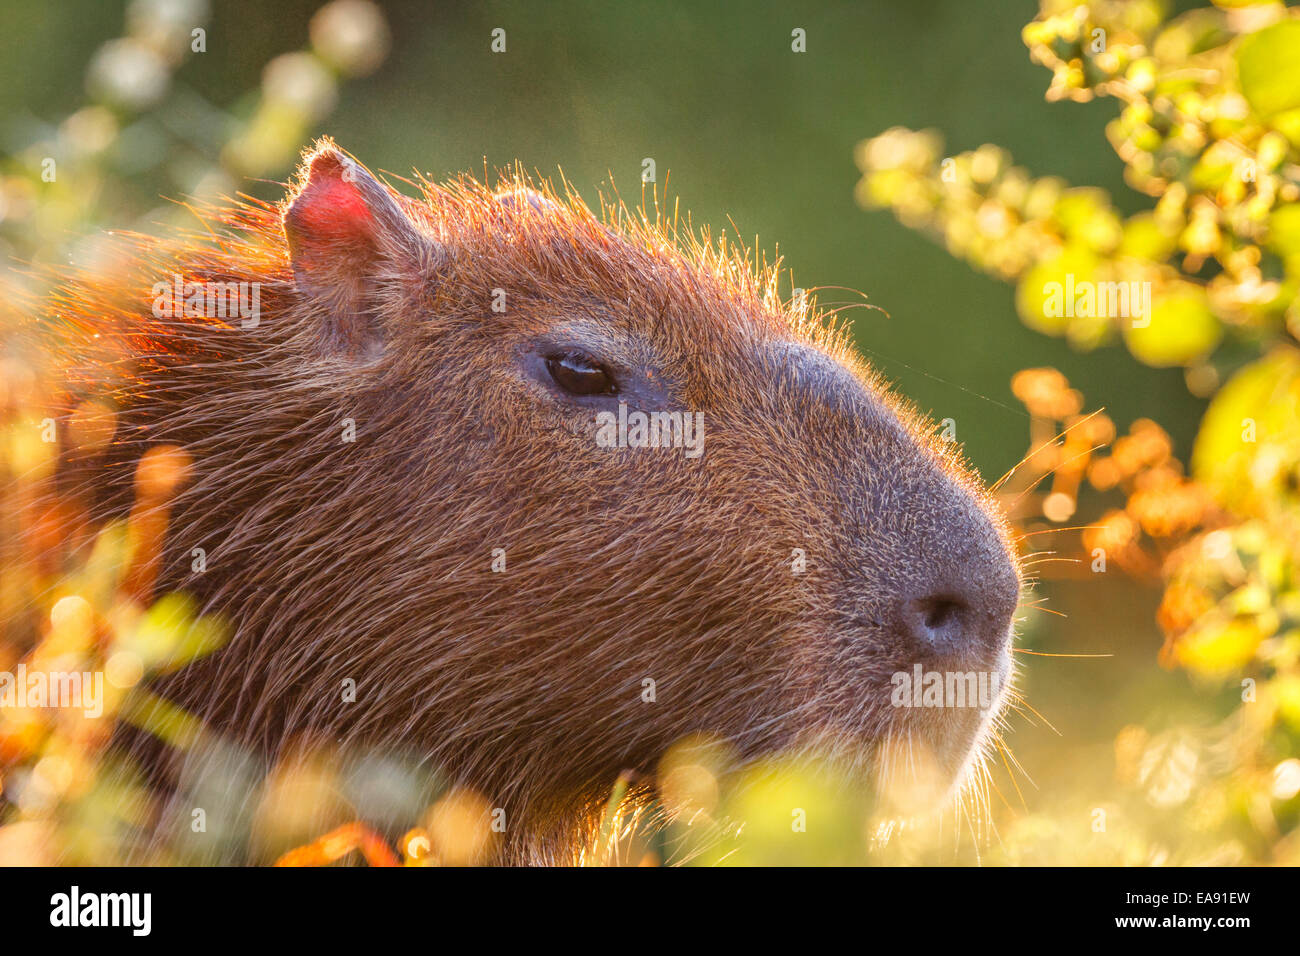 Backlit male capybara (Hydrochoerus hydrochaeris) portrait, Los Ilanos del Orinoco, Venezuela. Stock Photo